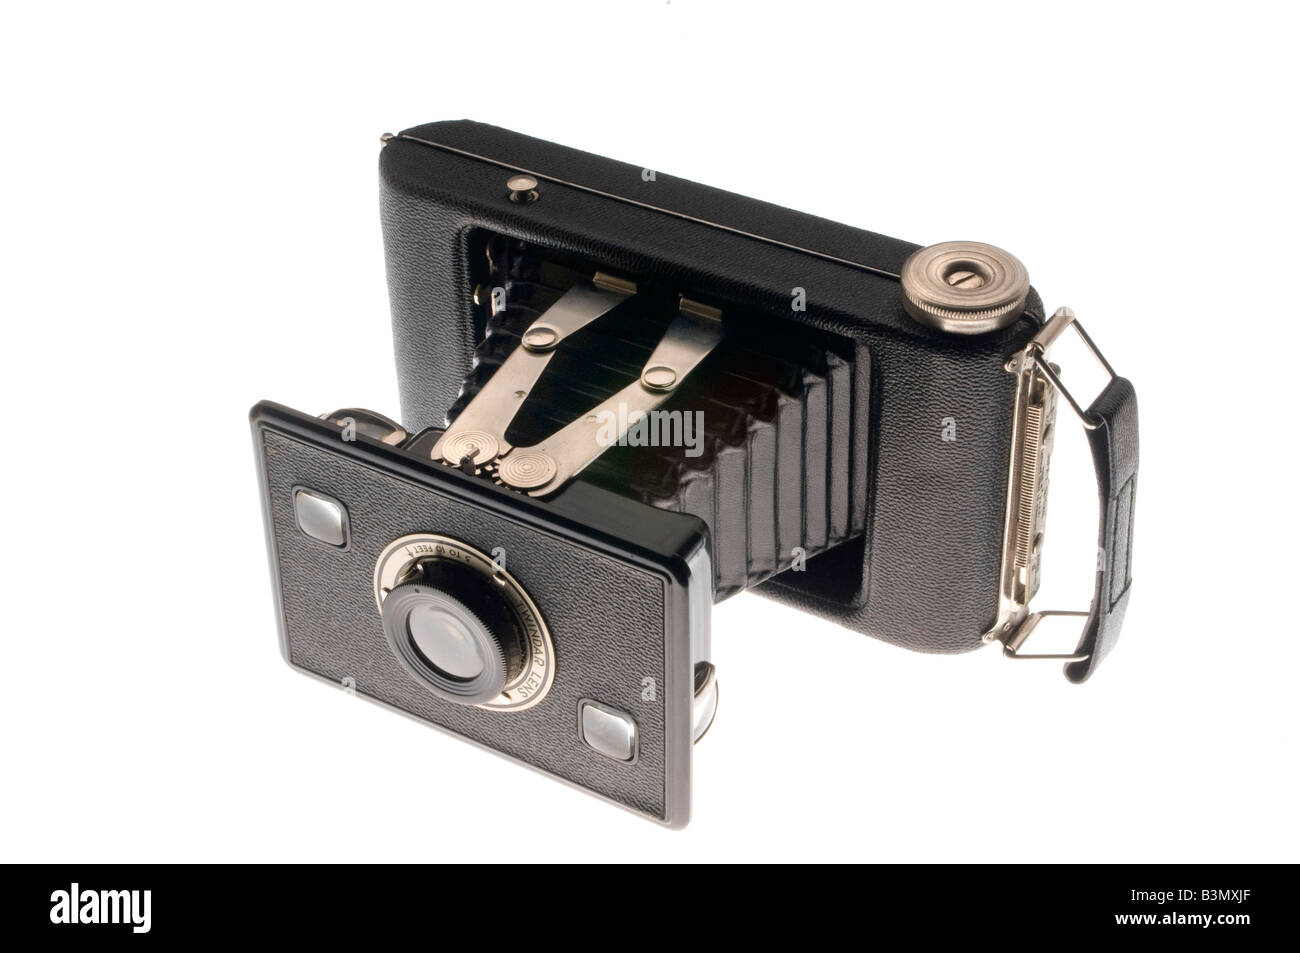 Old kodak camera -Fotos und -Bildmaterial in hoher Auflösung – Alamy